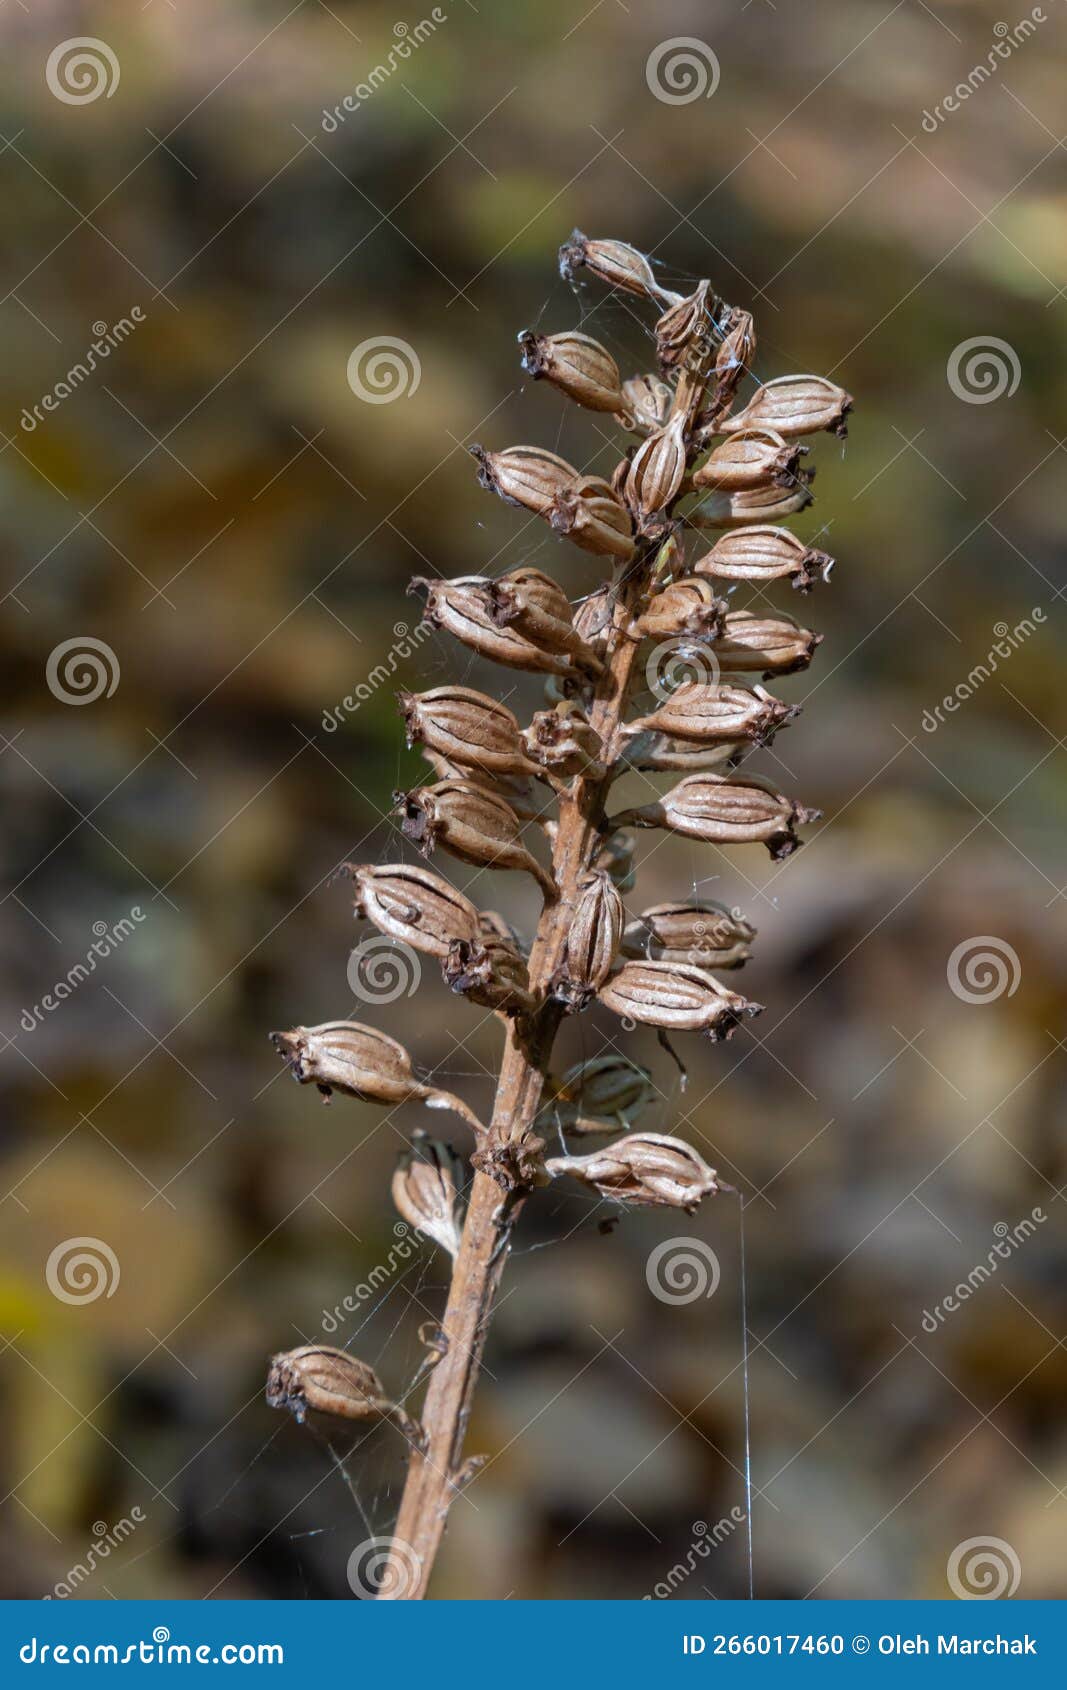 bird`s-nest orchid neottia nidus-avis, heterotrophic orchid. in the forest, close-up